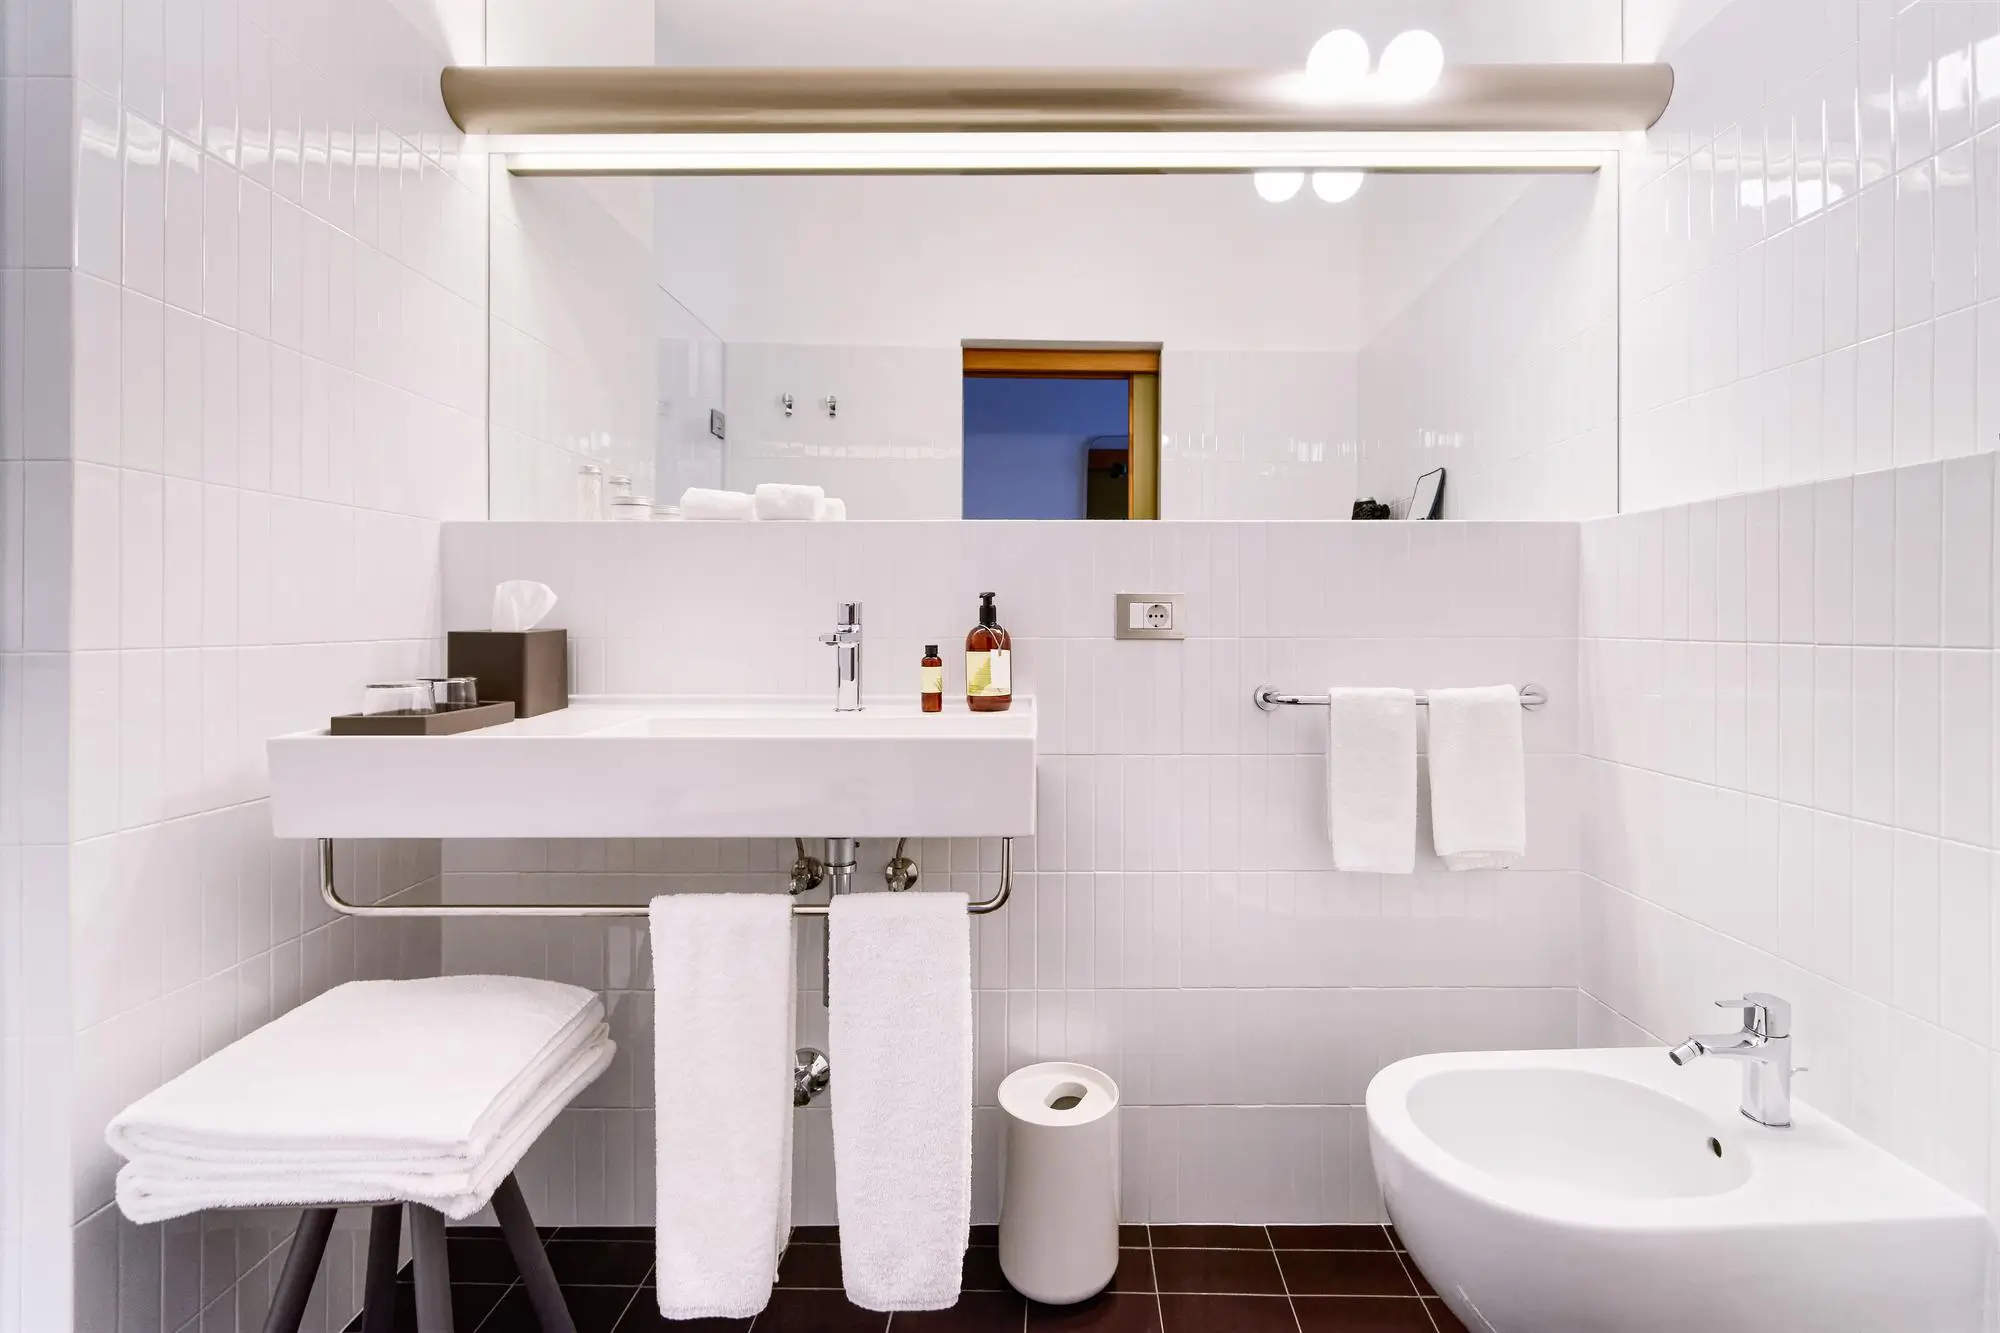 Outdated bathroom design